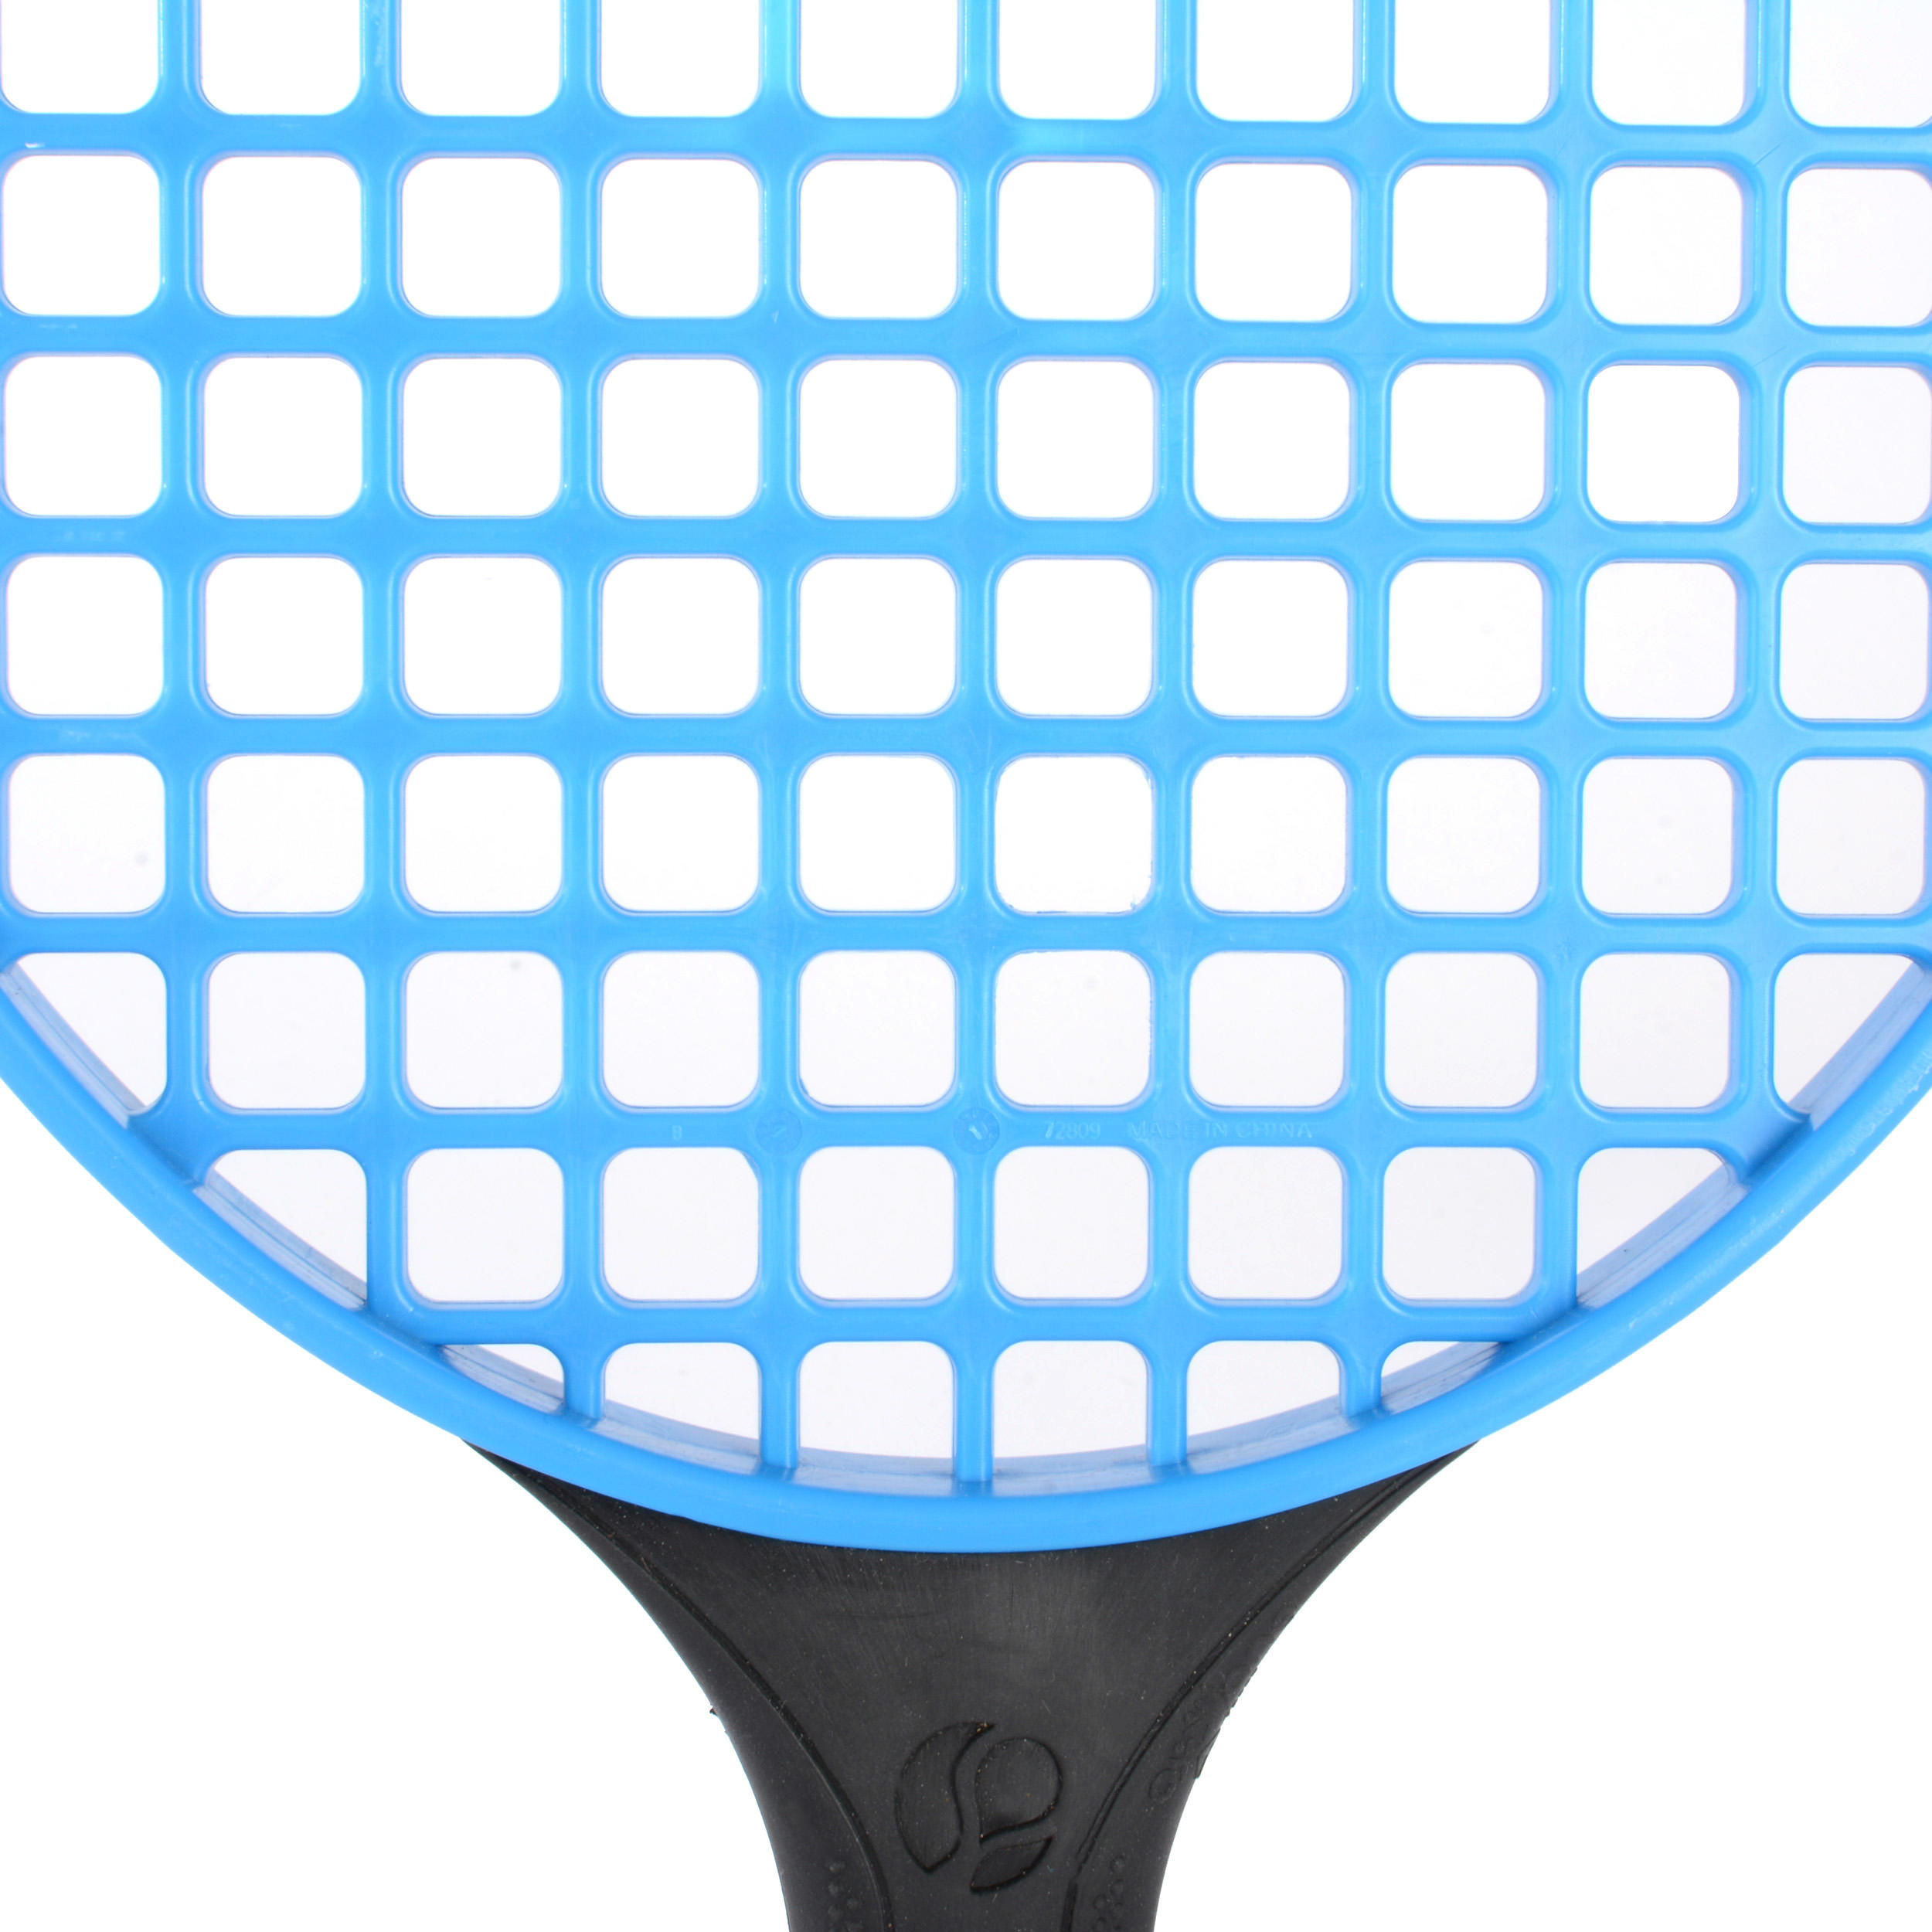 ARTENGO Turnball Speedball Racket - Blue